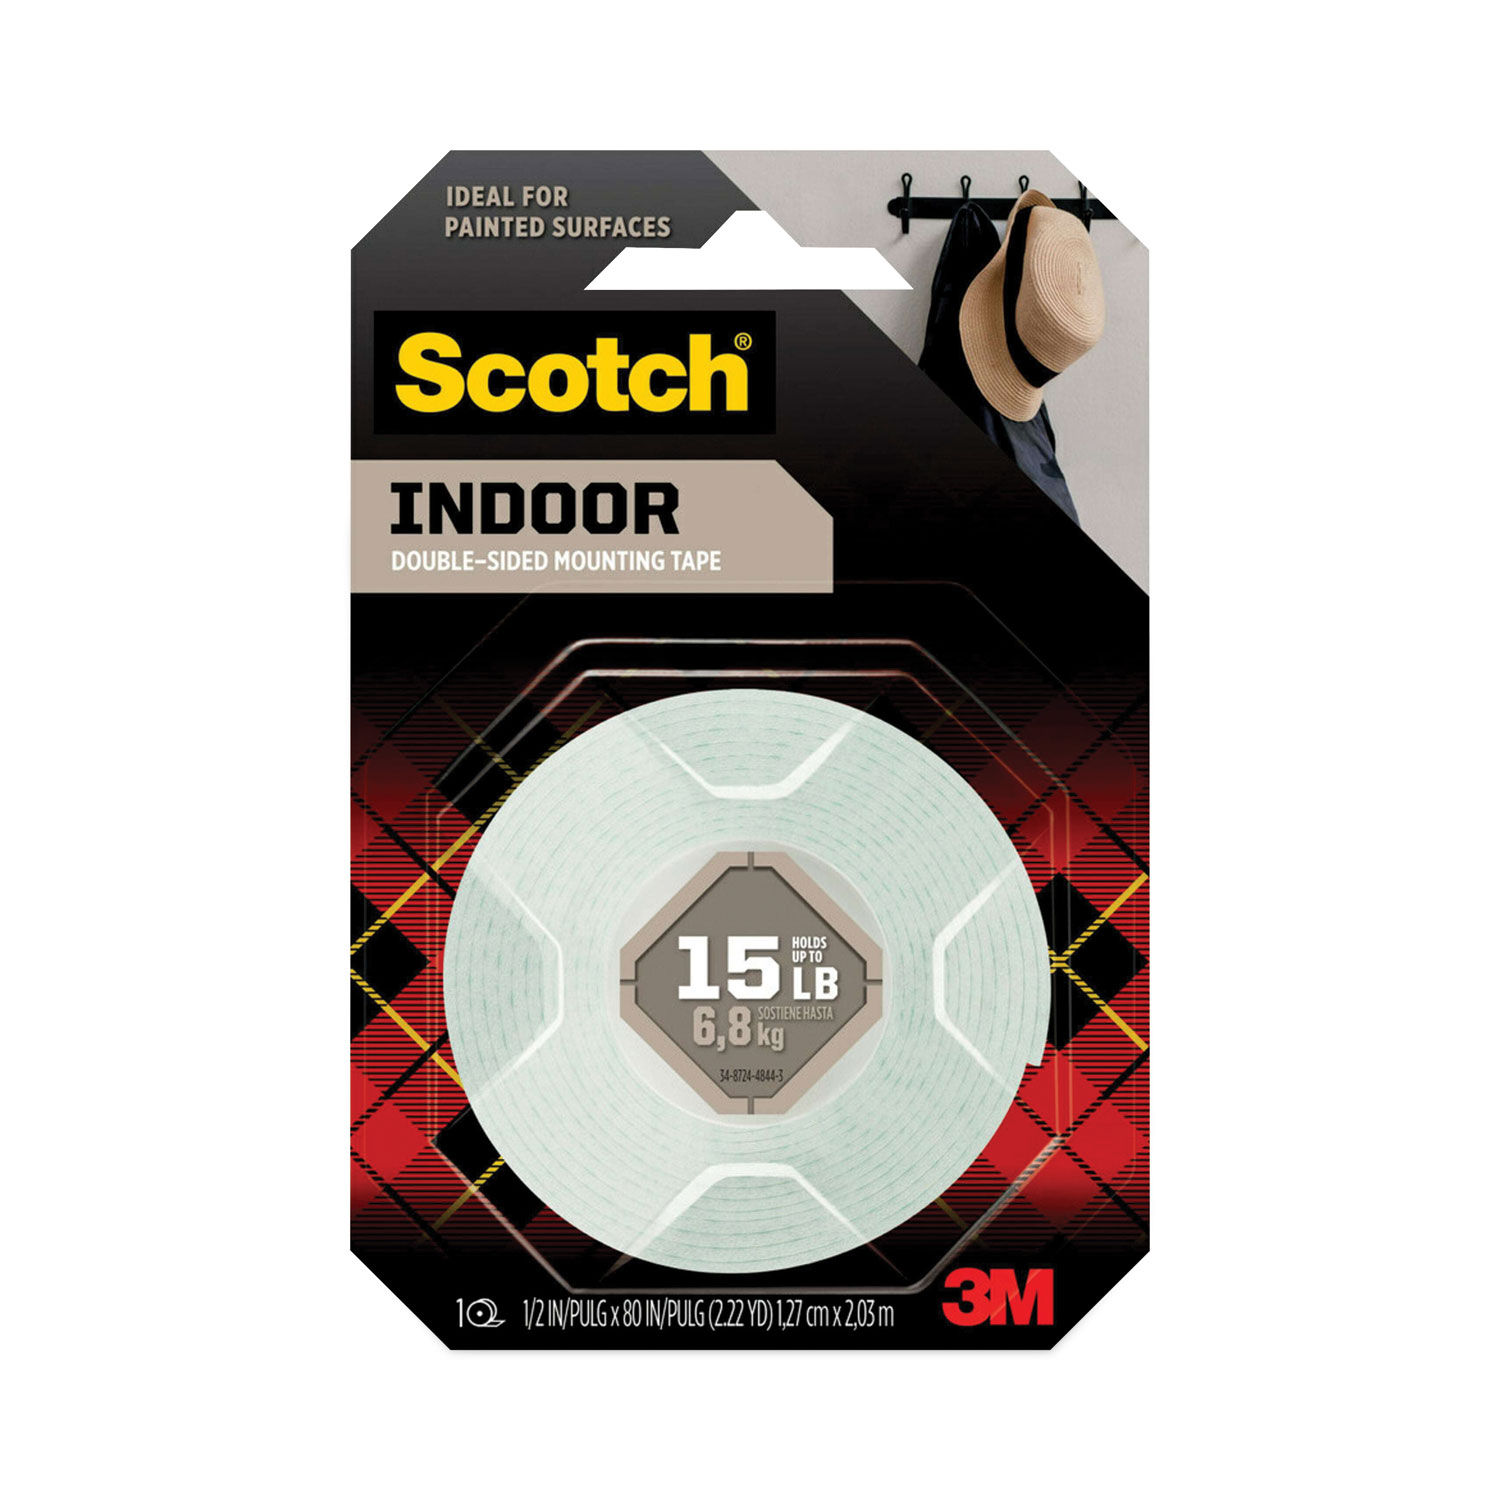 12 Pack: 3M Scotch™ Household Scissors